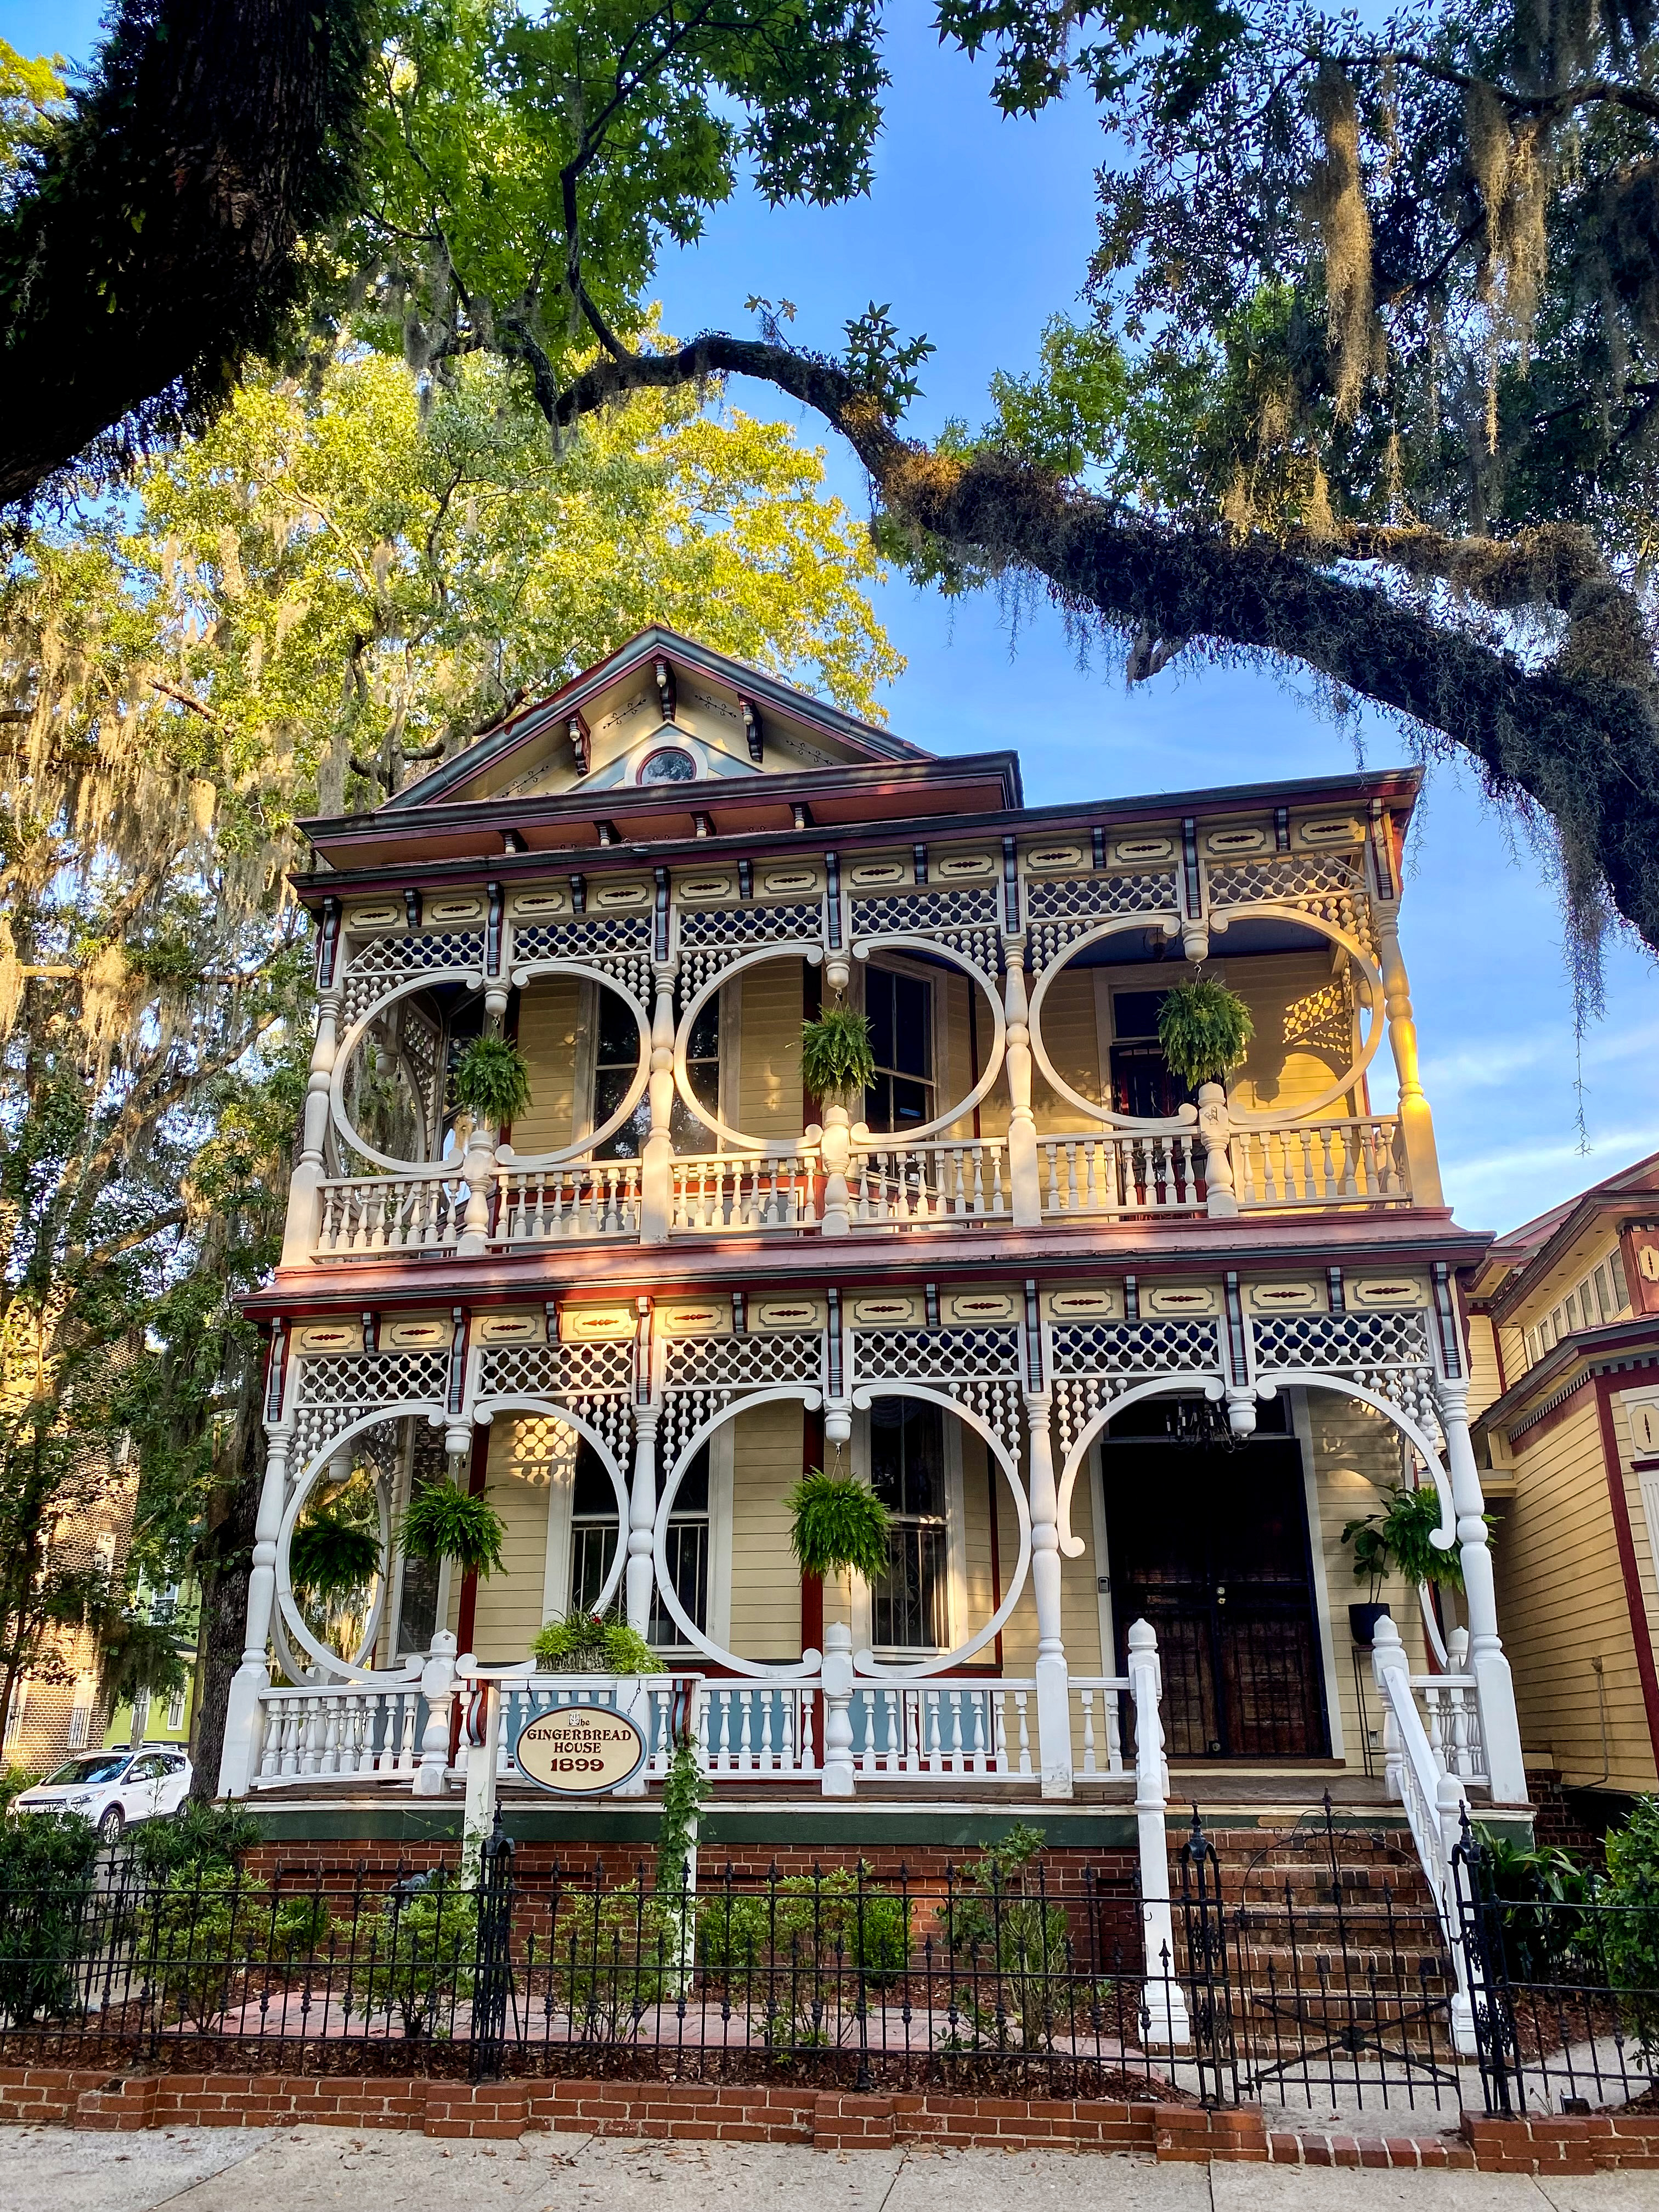 Savannah's Gingerbread House